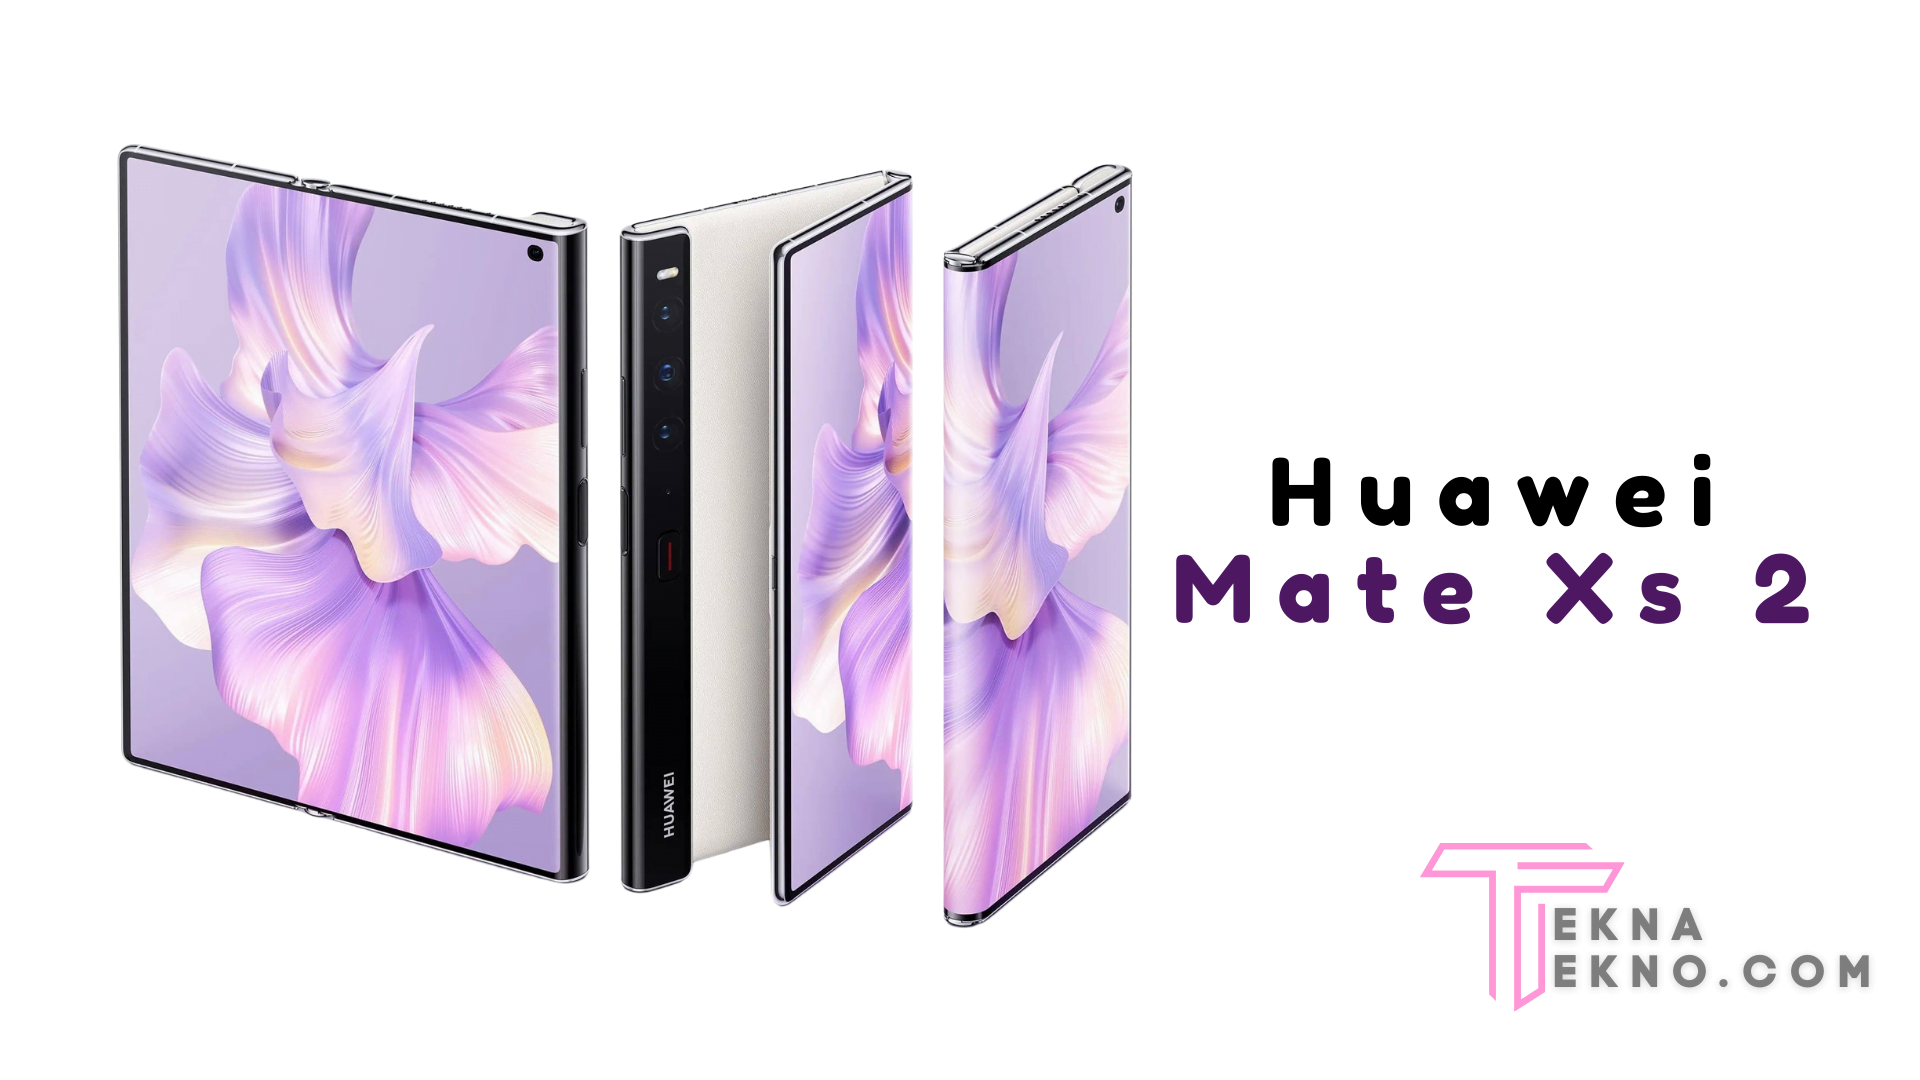 Detai Spesifikasi Huawei Mate Xs 2